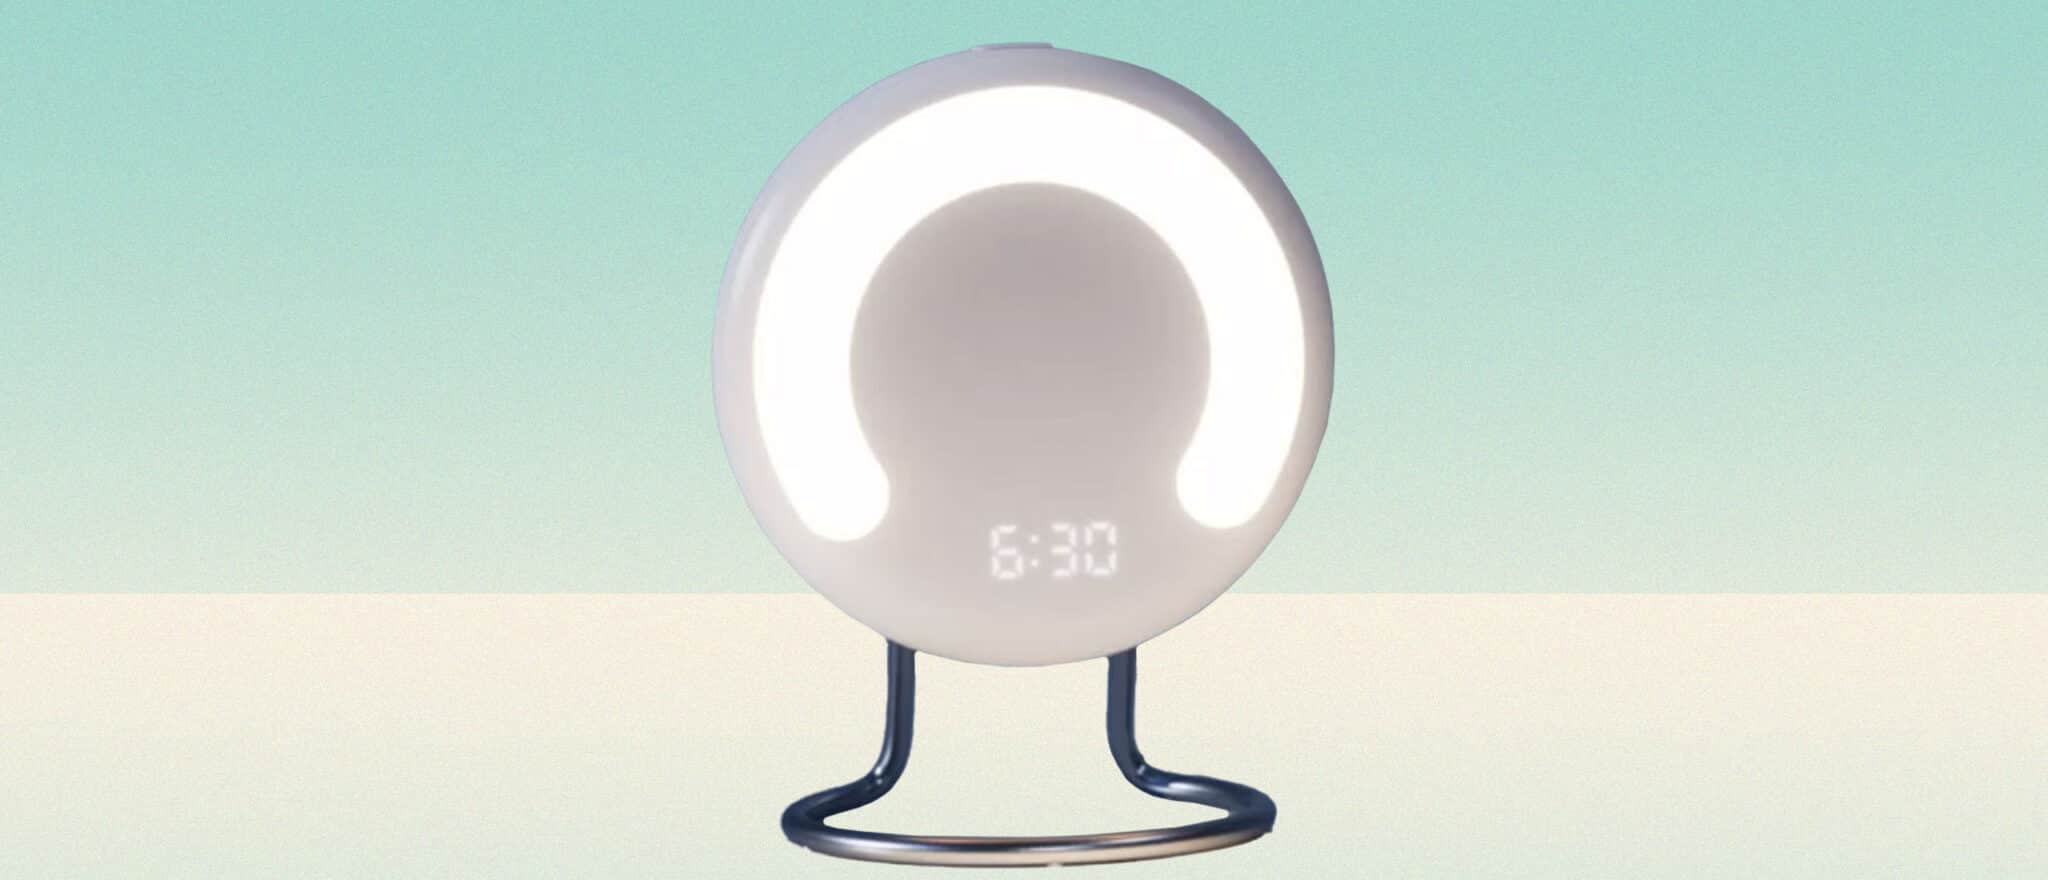 Wake Up Grumpy? Amazon’s New Alarm Clock Can Help